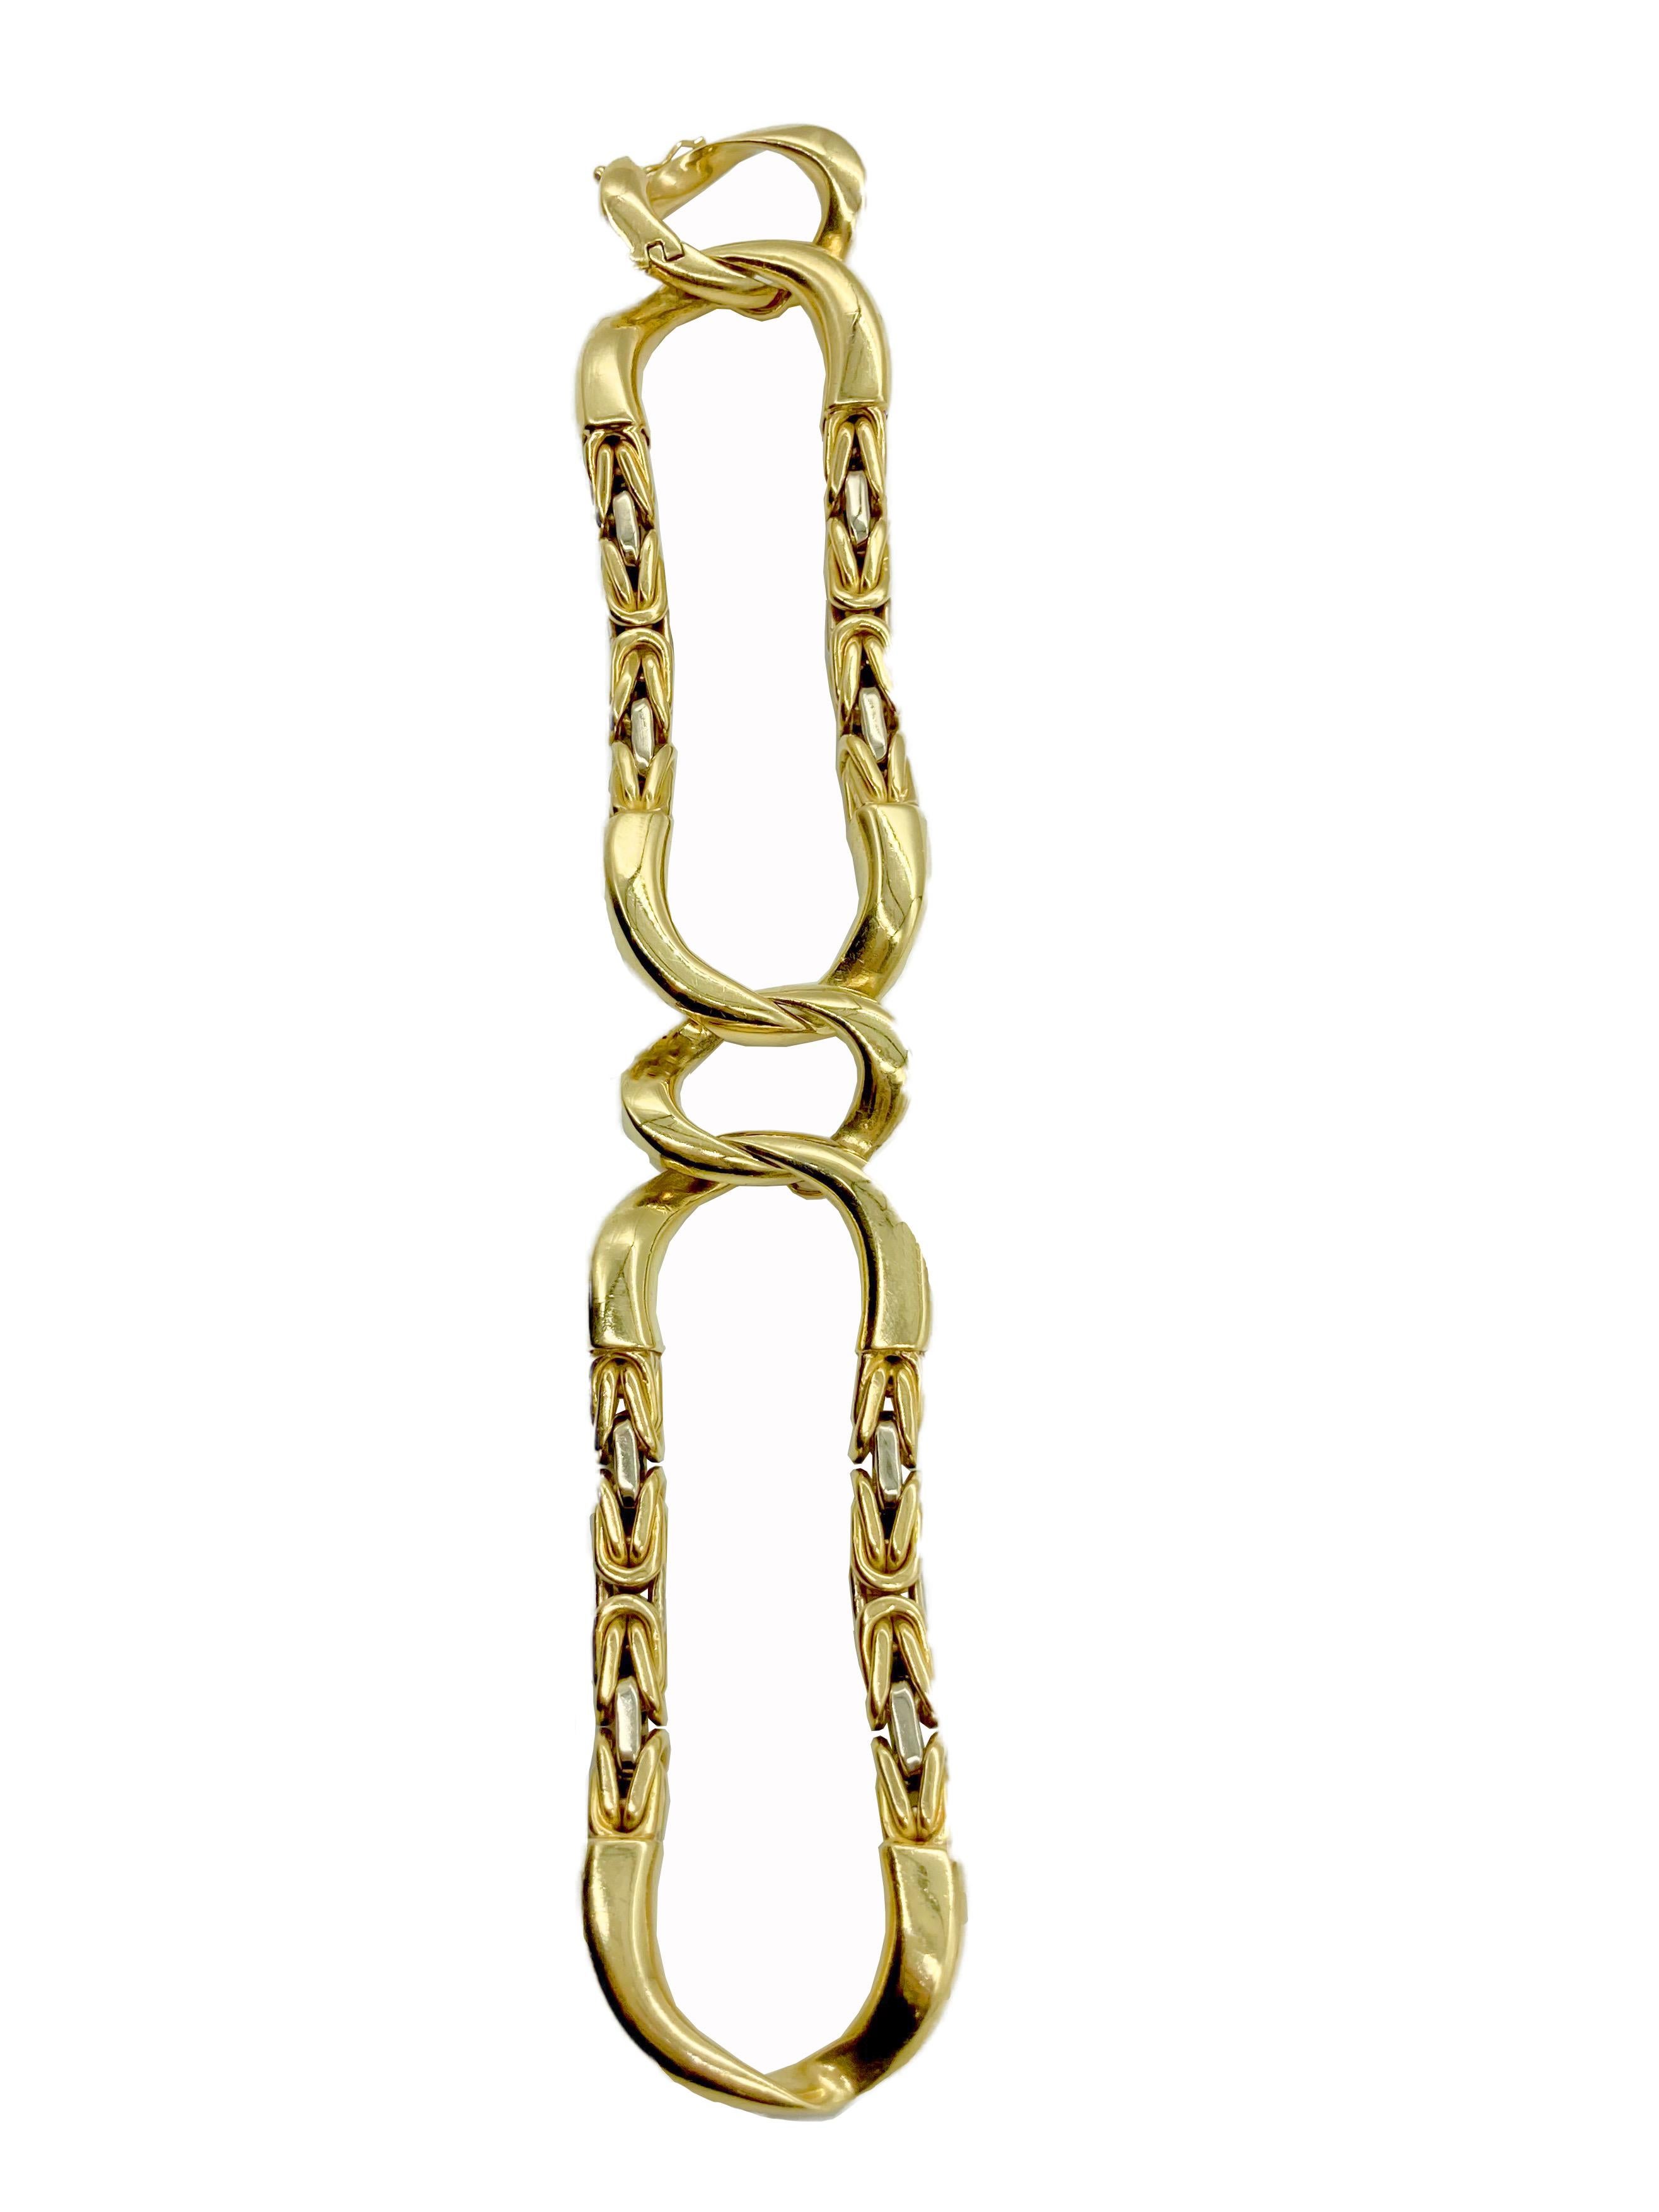 Women's Bulgari 18 Karat Yellow Gold Link Bracelet in Original Box For Sale